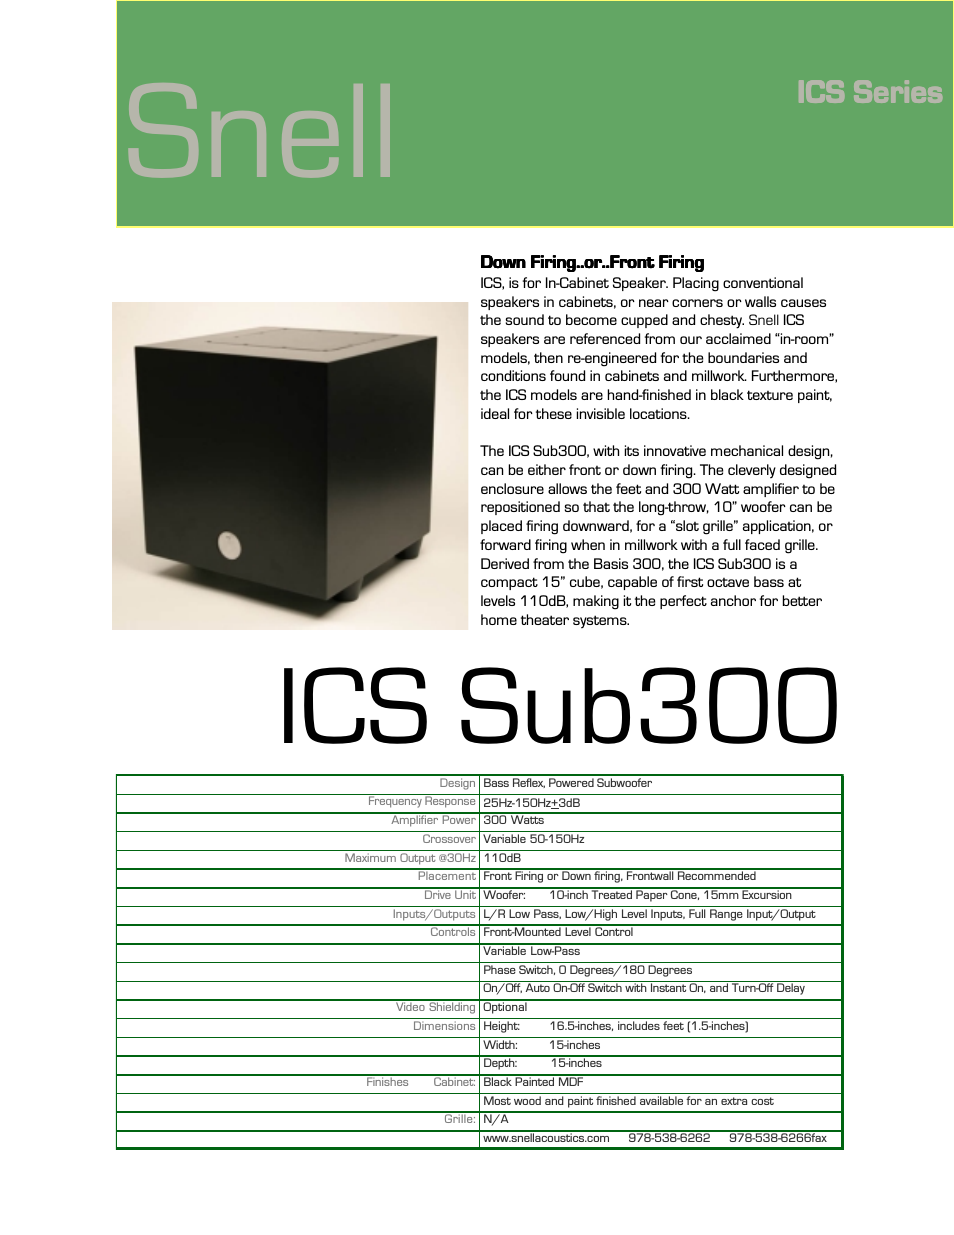 ICS Sub300